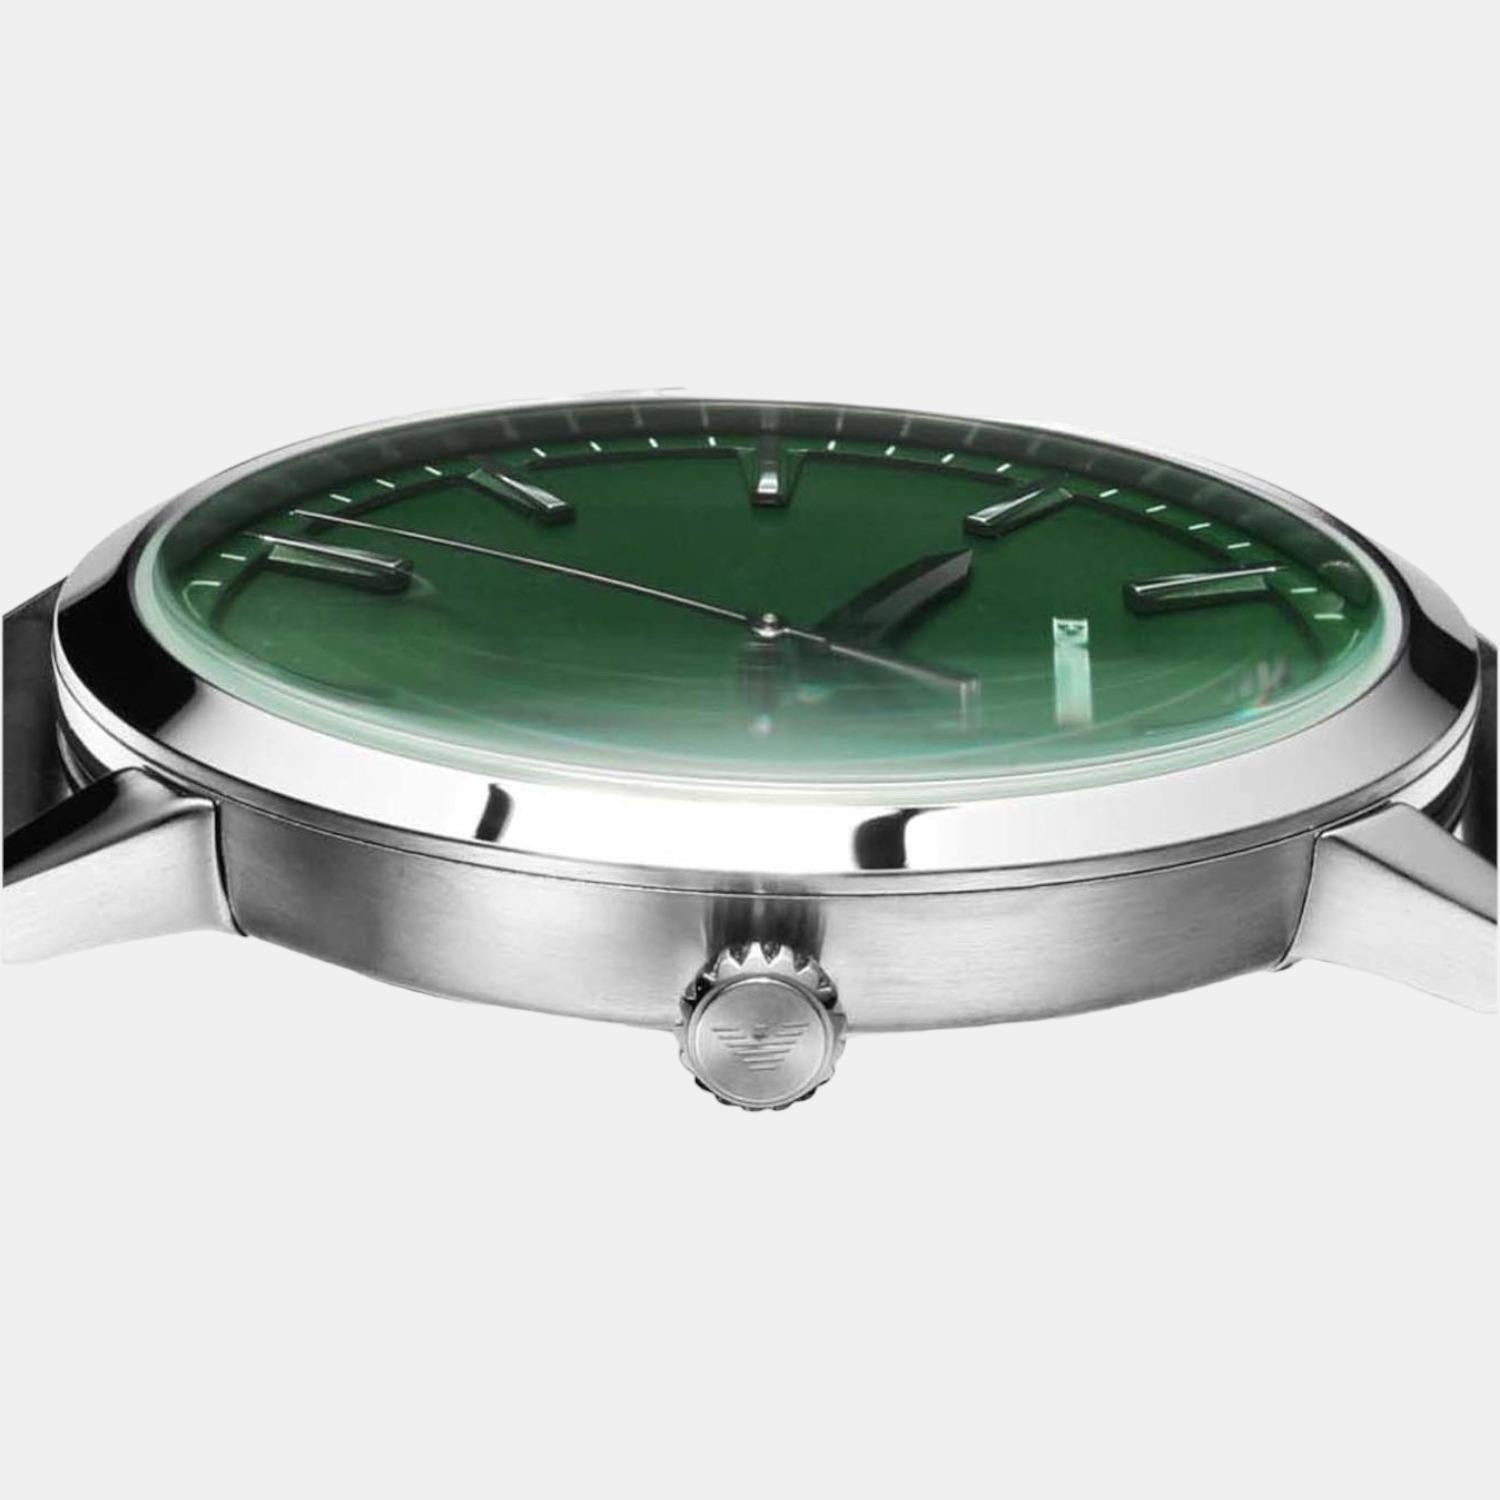 armani-green-analog-men-watch-ar11509